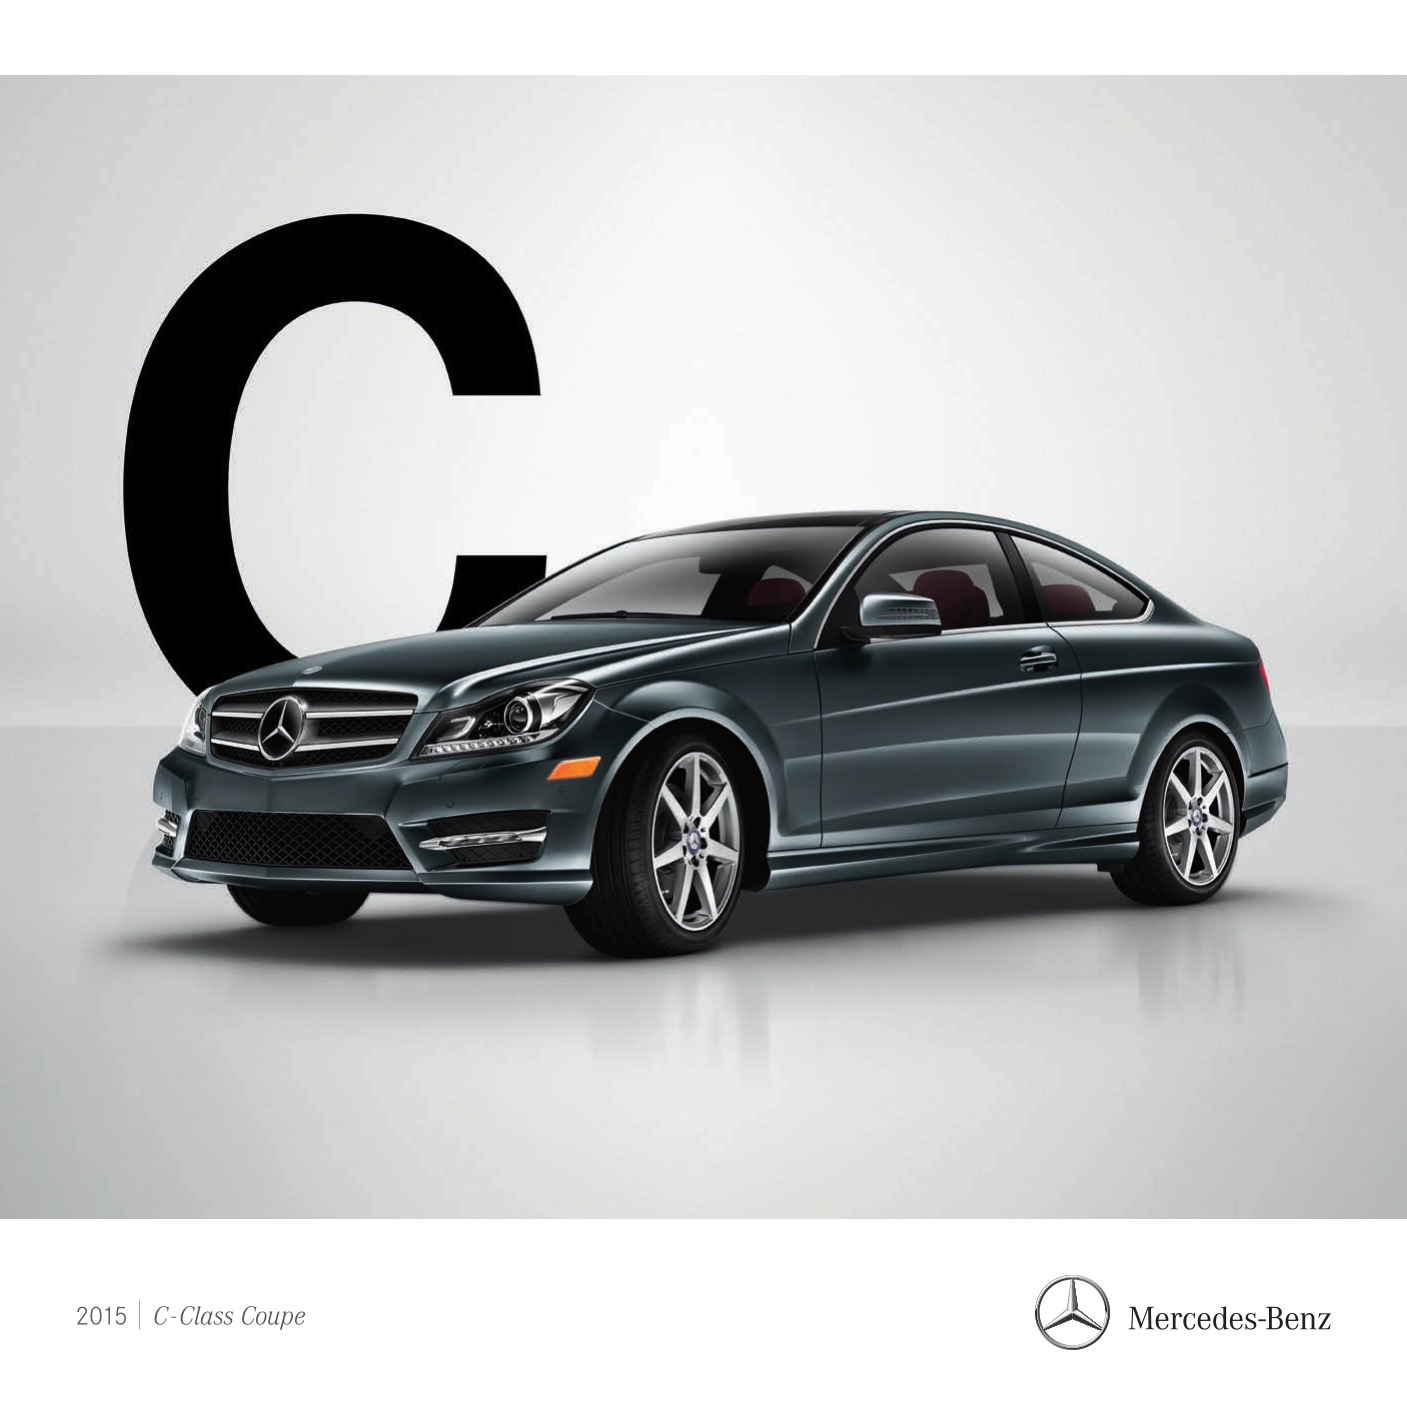 2015 Mercedes-Benz C-Class Coupe Brochure